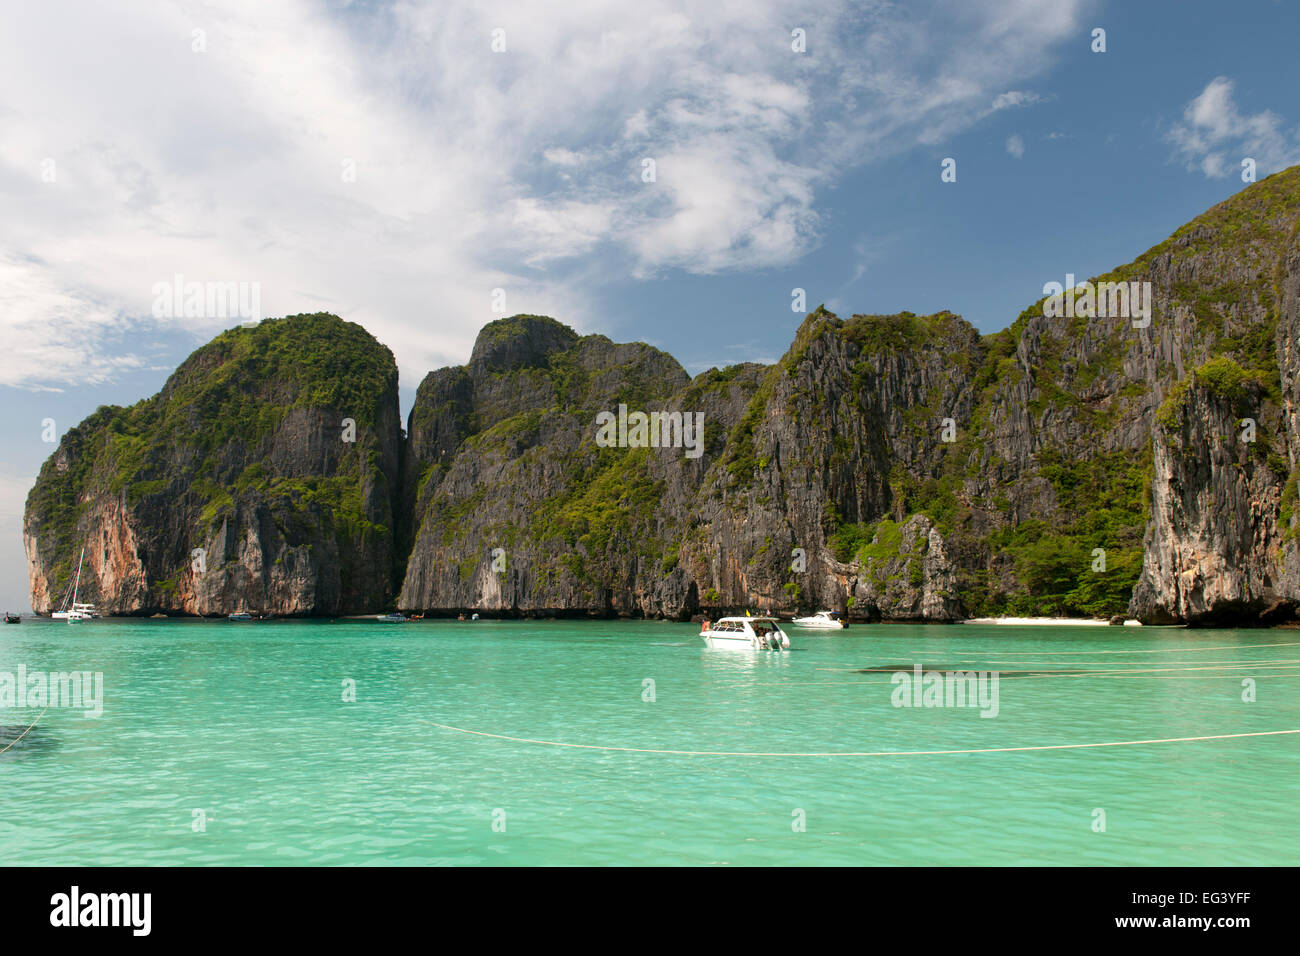 Tourist boats in Maya Bay, Koh Phi Phi Ley island, Thailand. Stock Photo